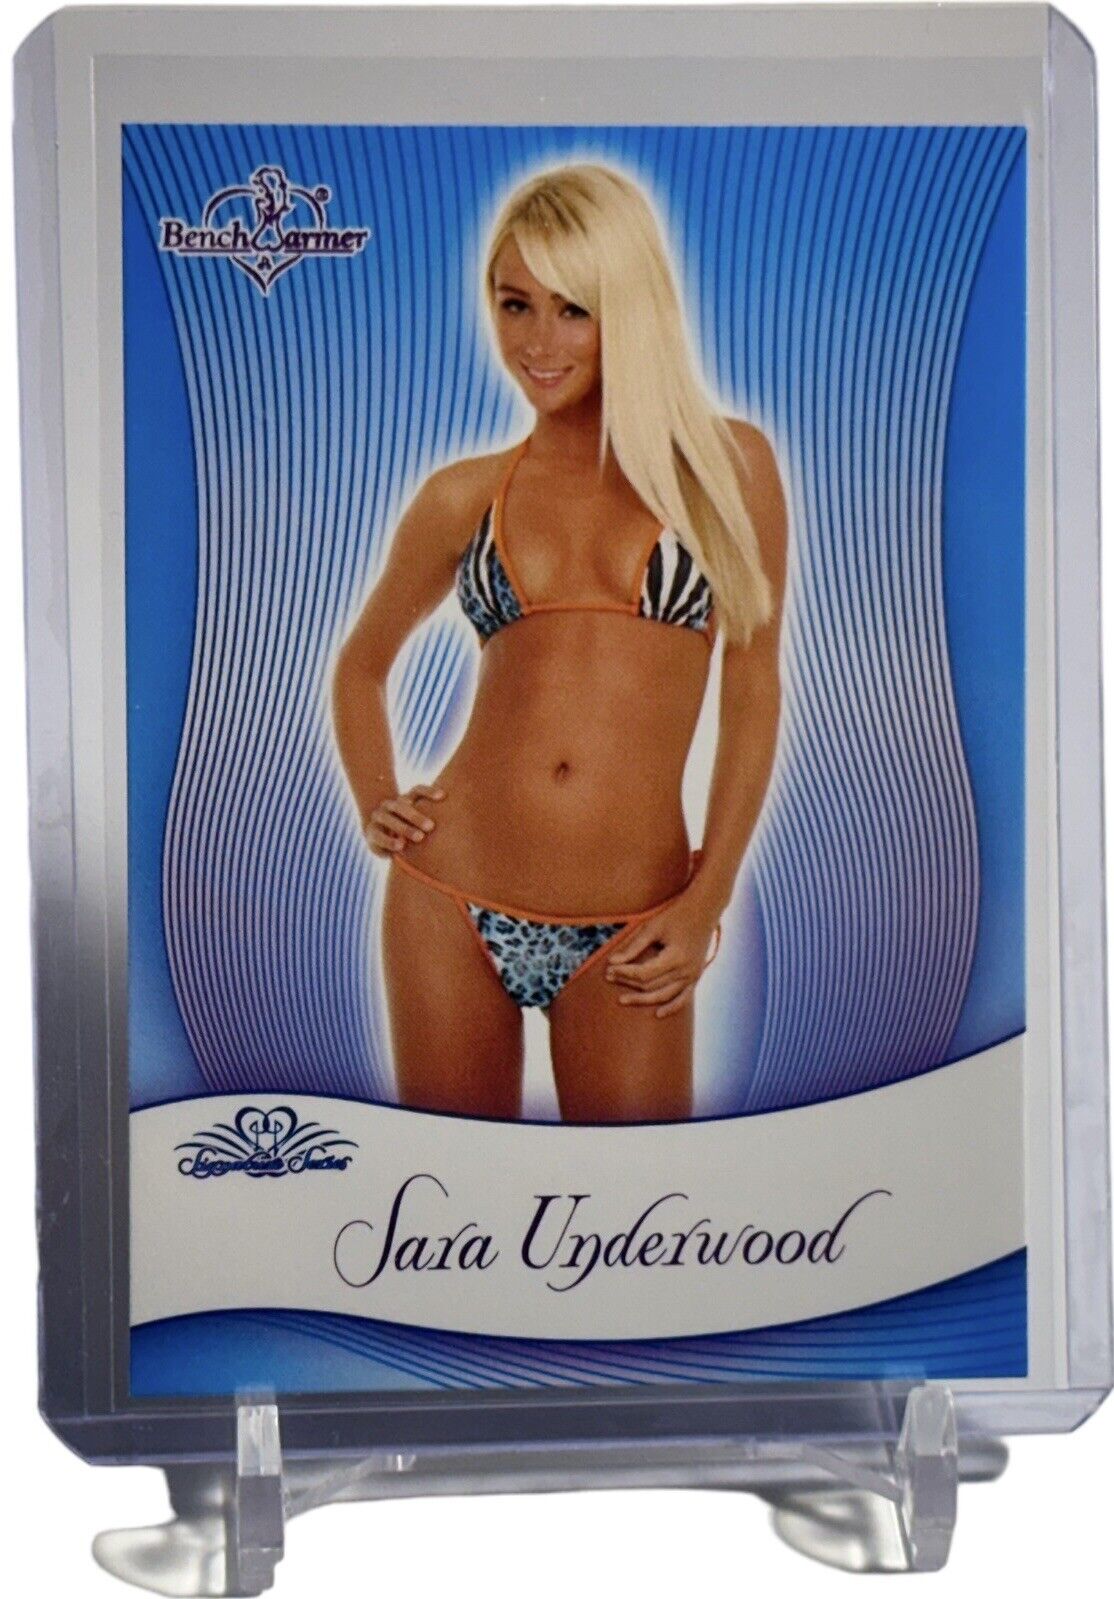 Sara Jean Underwood 2010 Bench Warmer Signature Series Card #15 Playboy Playmate